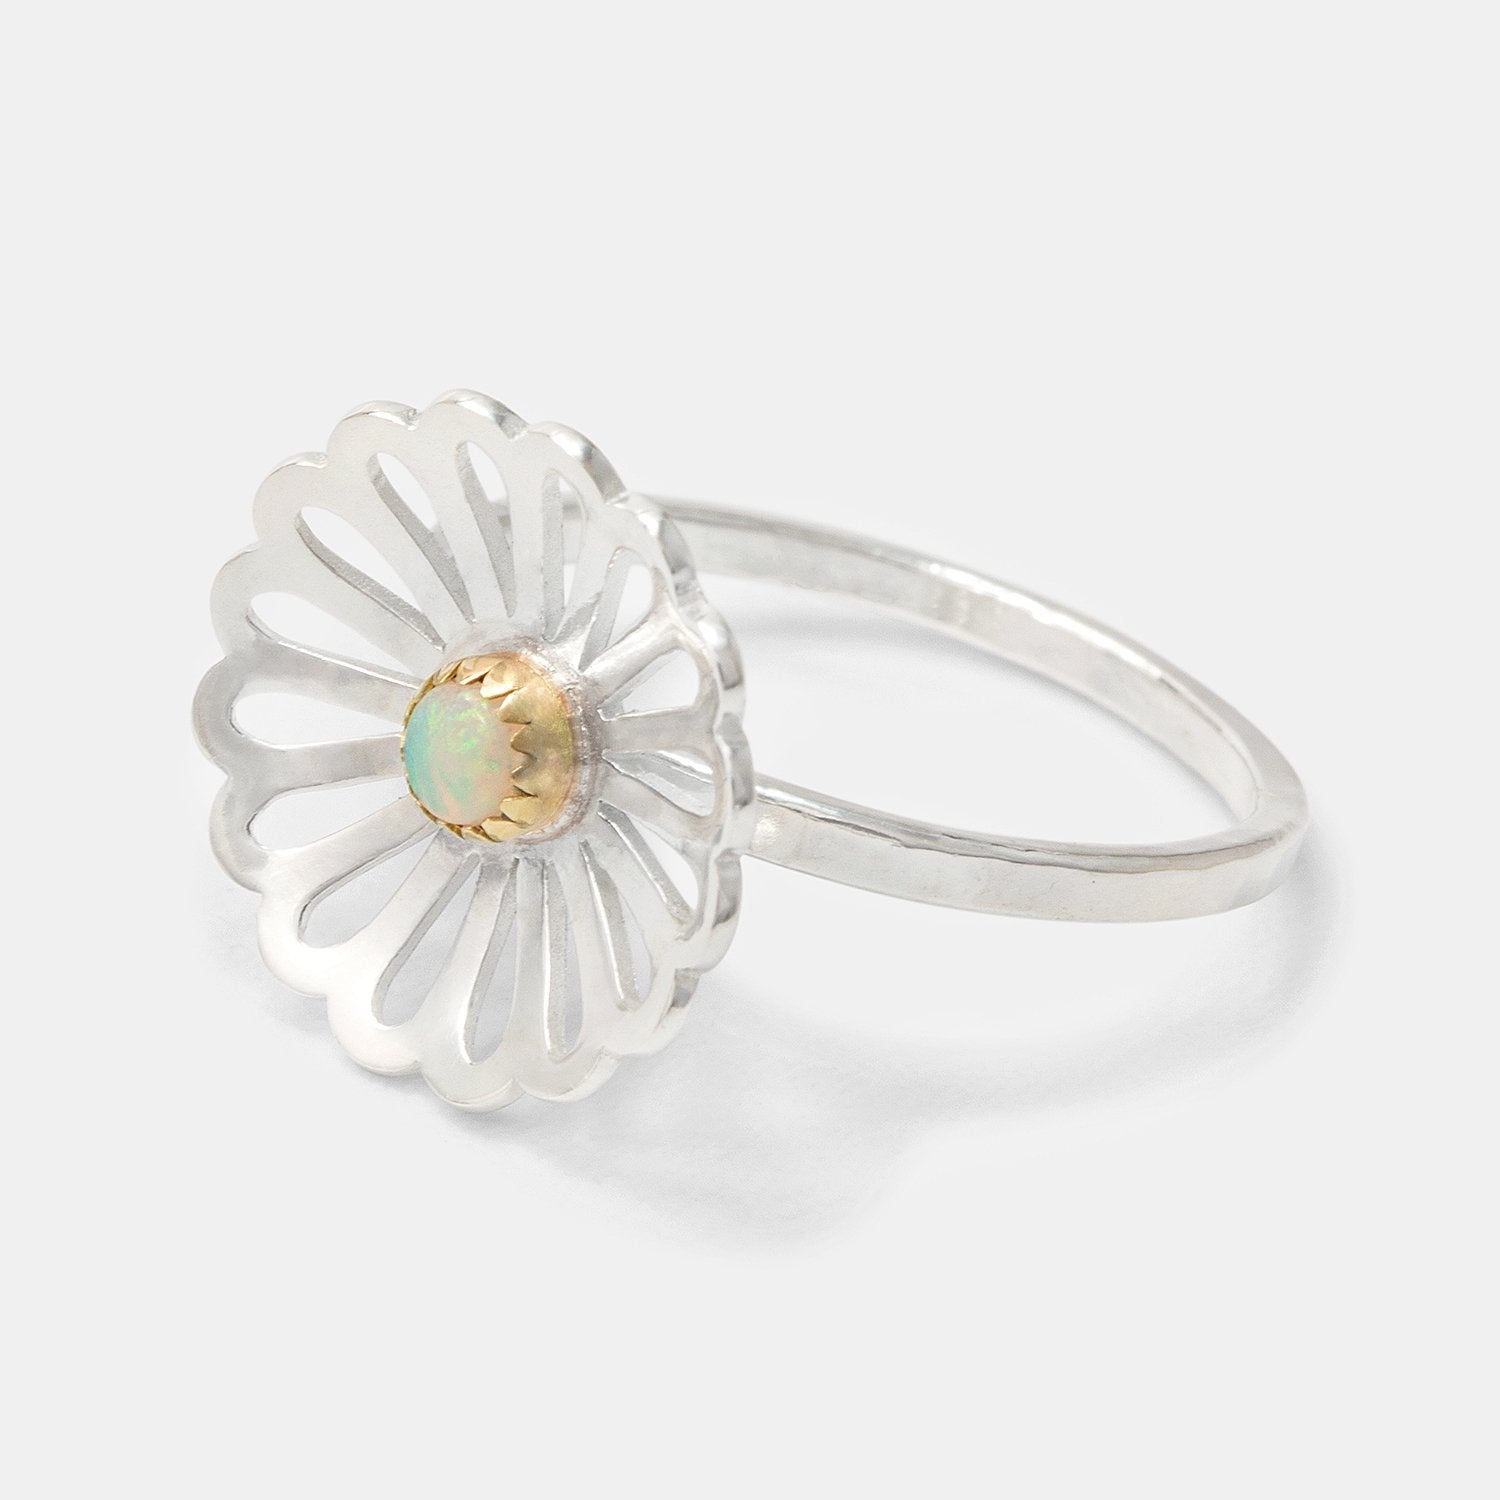 Daisy & opal cocktail ring - Simone Walsh Jewellery Australia